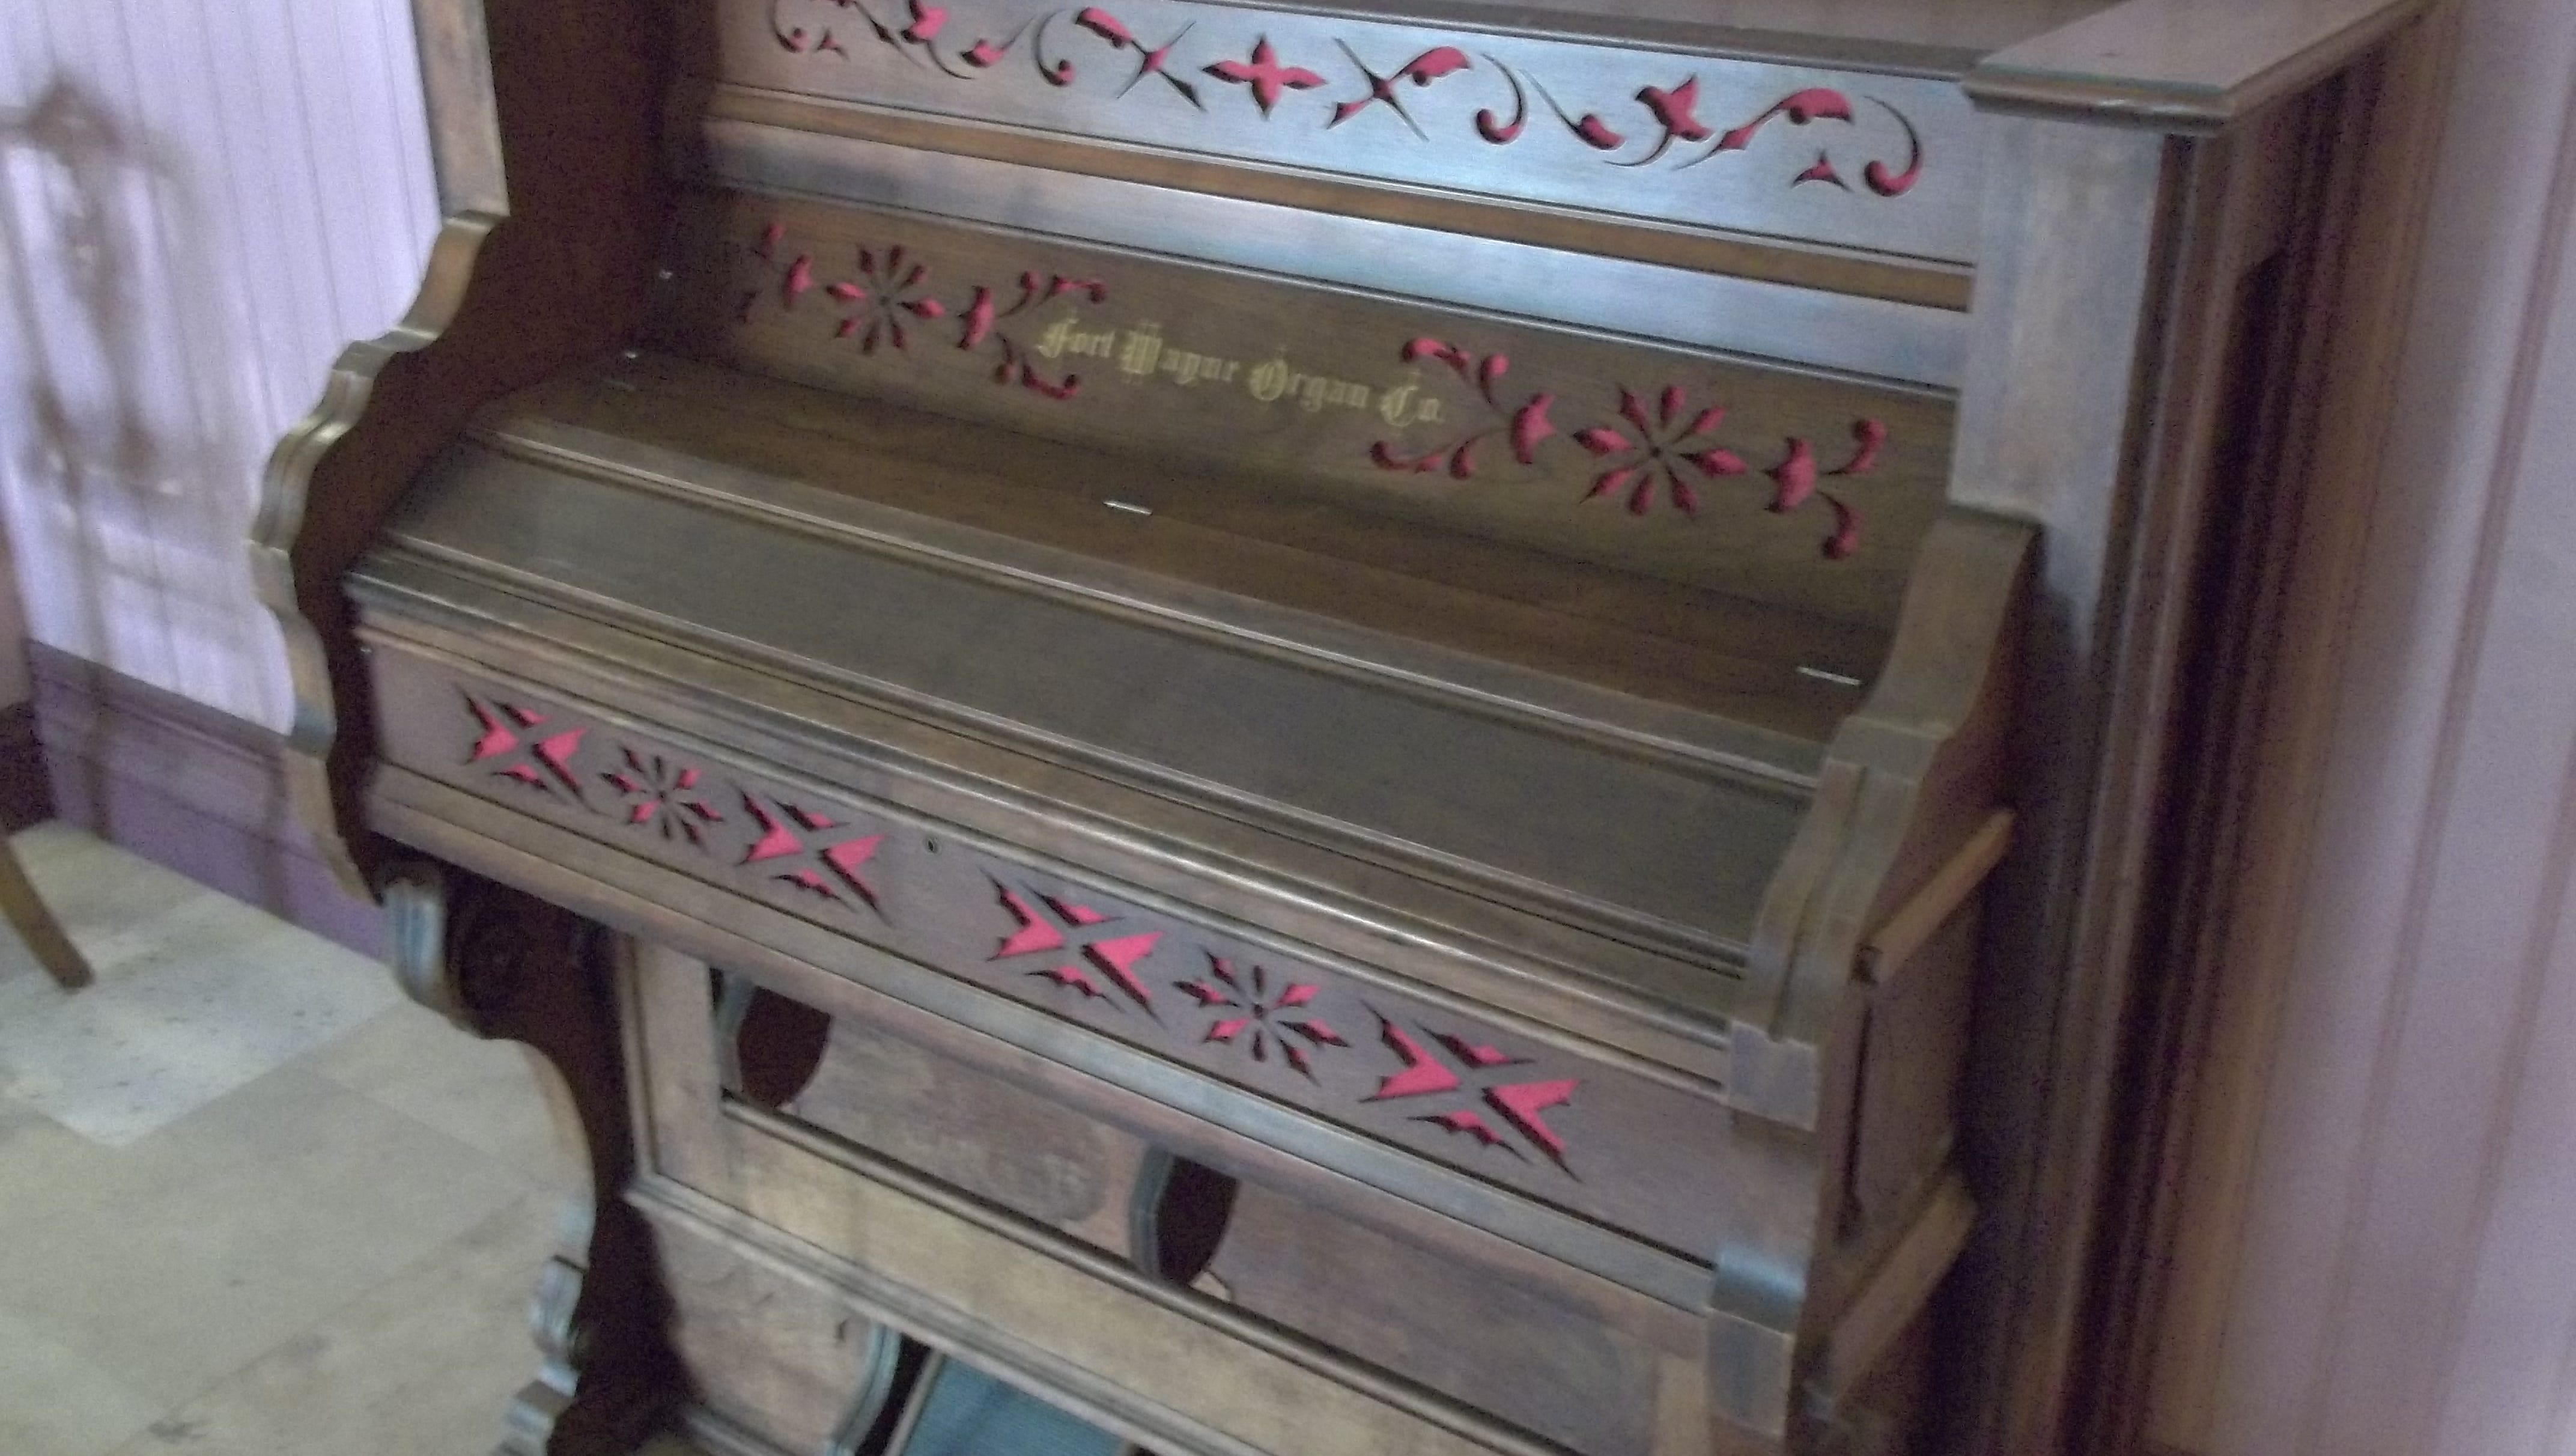 One room has an antique organ.